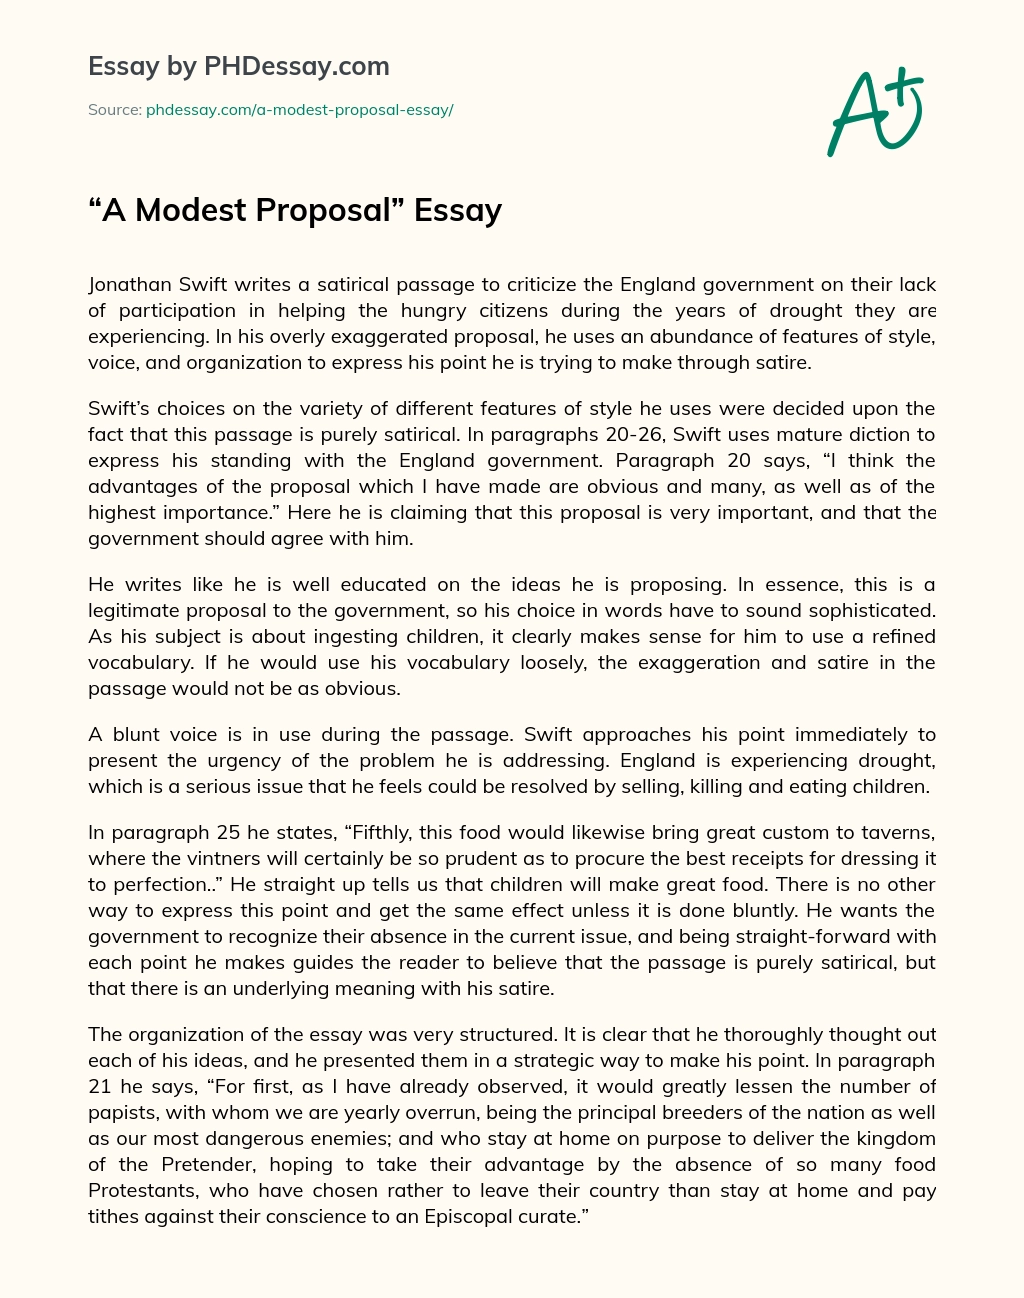 A Modest Proposal Essay essay